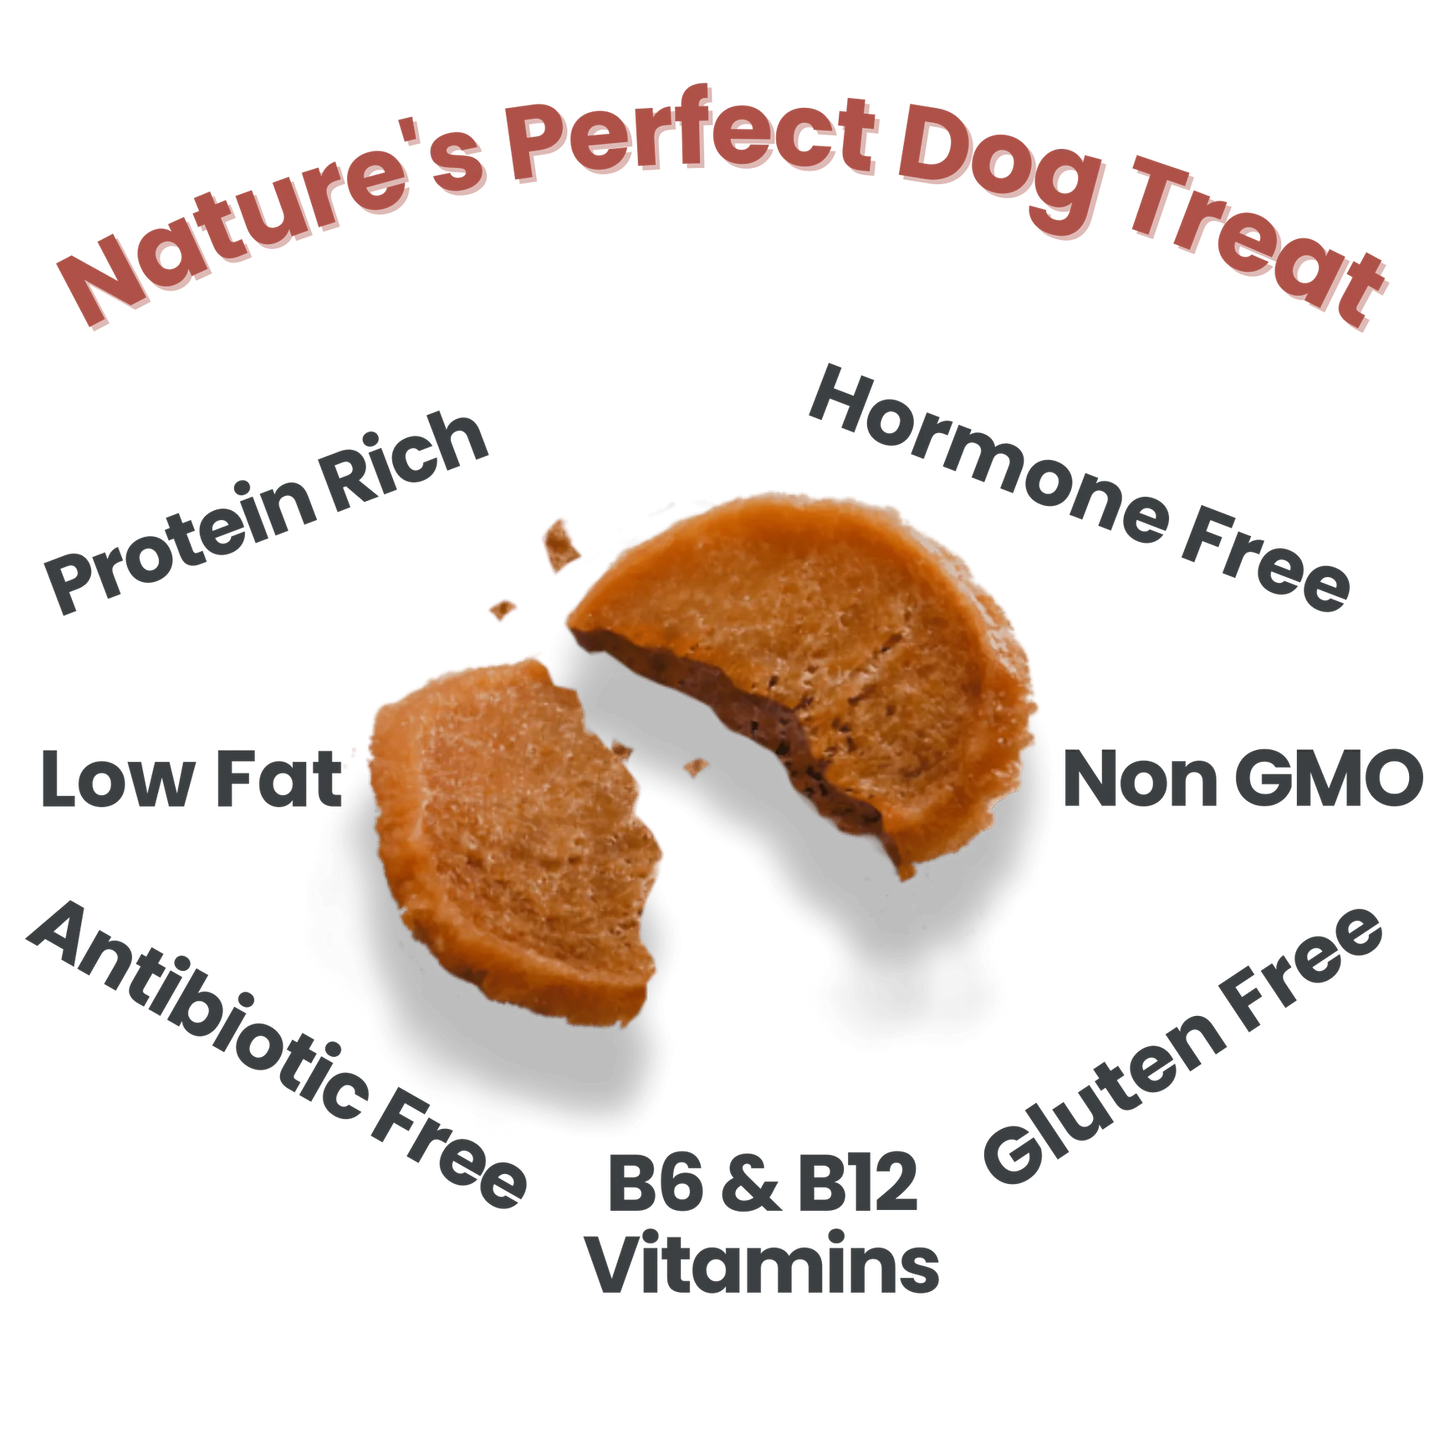 Farm To Pet Single Ingredient Turkey Chips Snack Size, Dog Treat